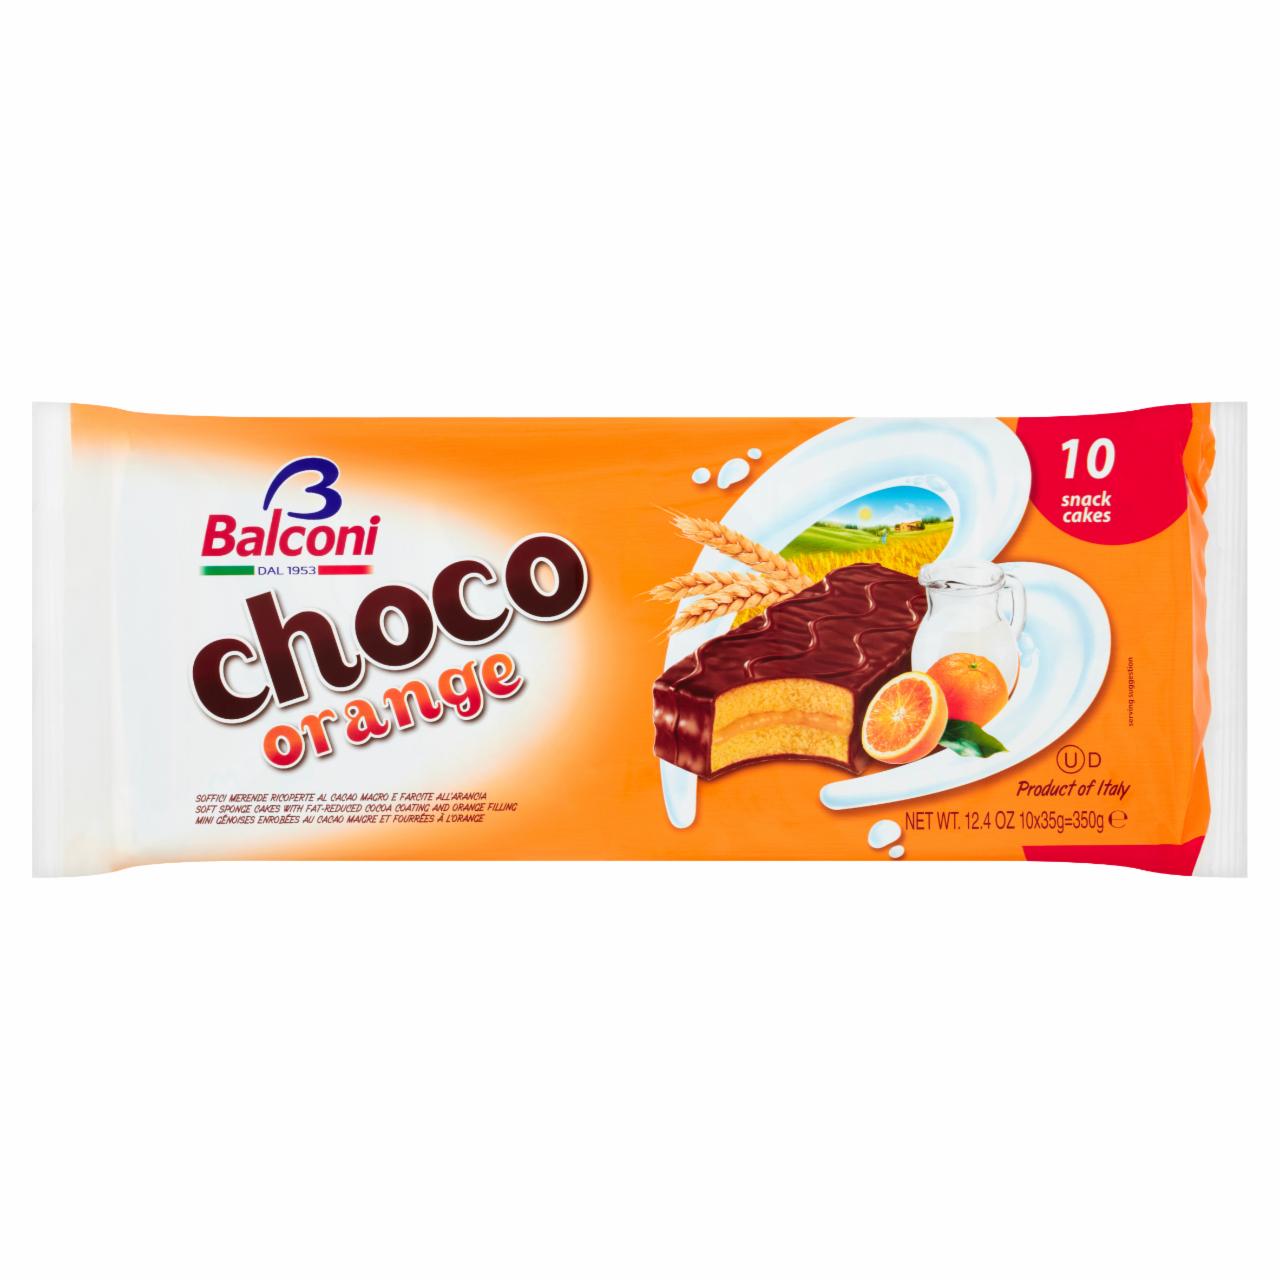 Photo - Balconi Choco Orange Sweet Baked Product Filled with Orange and Coated with Cocoa 10 x 35 g (350 g)